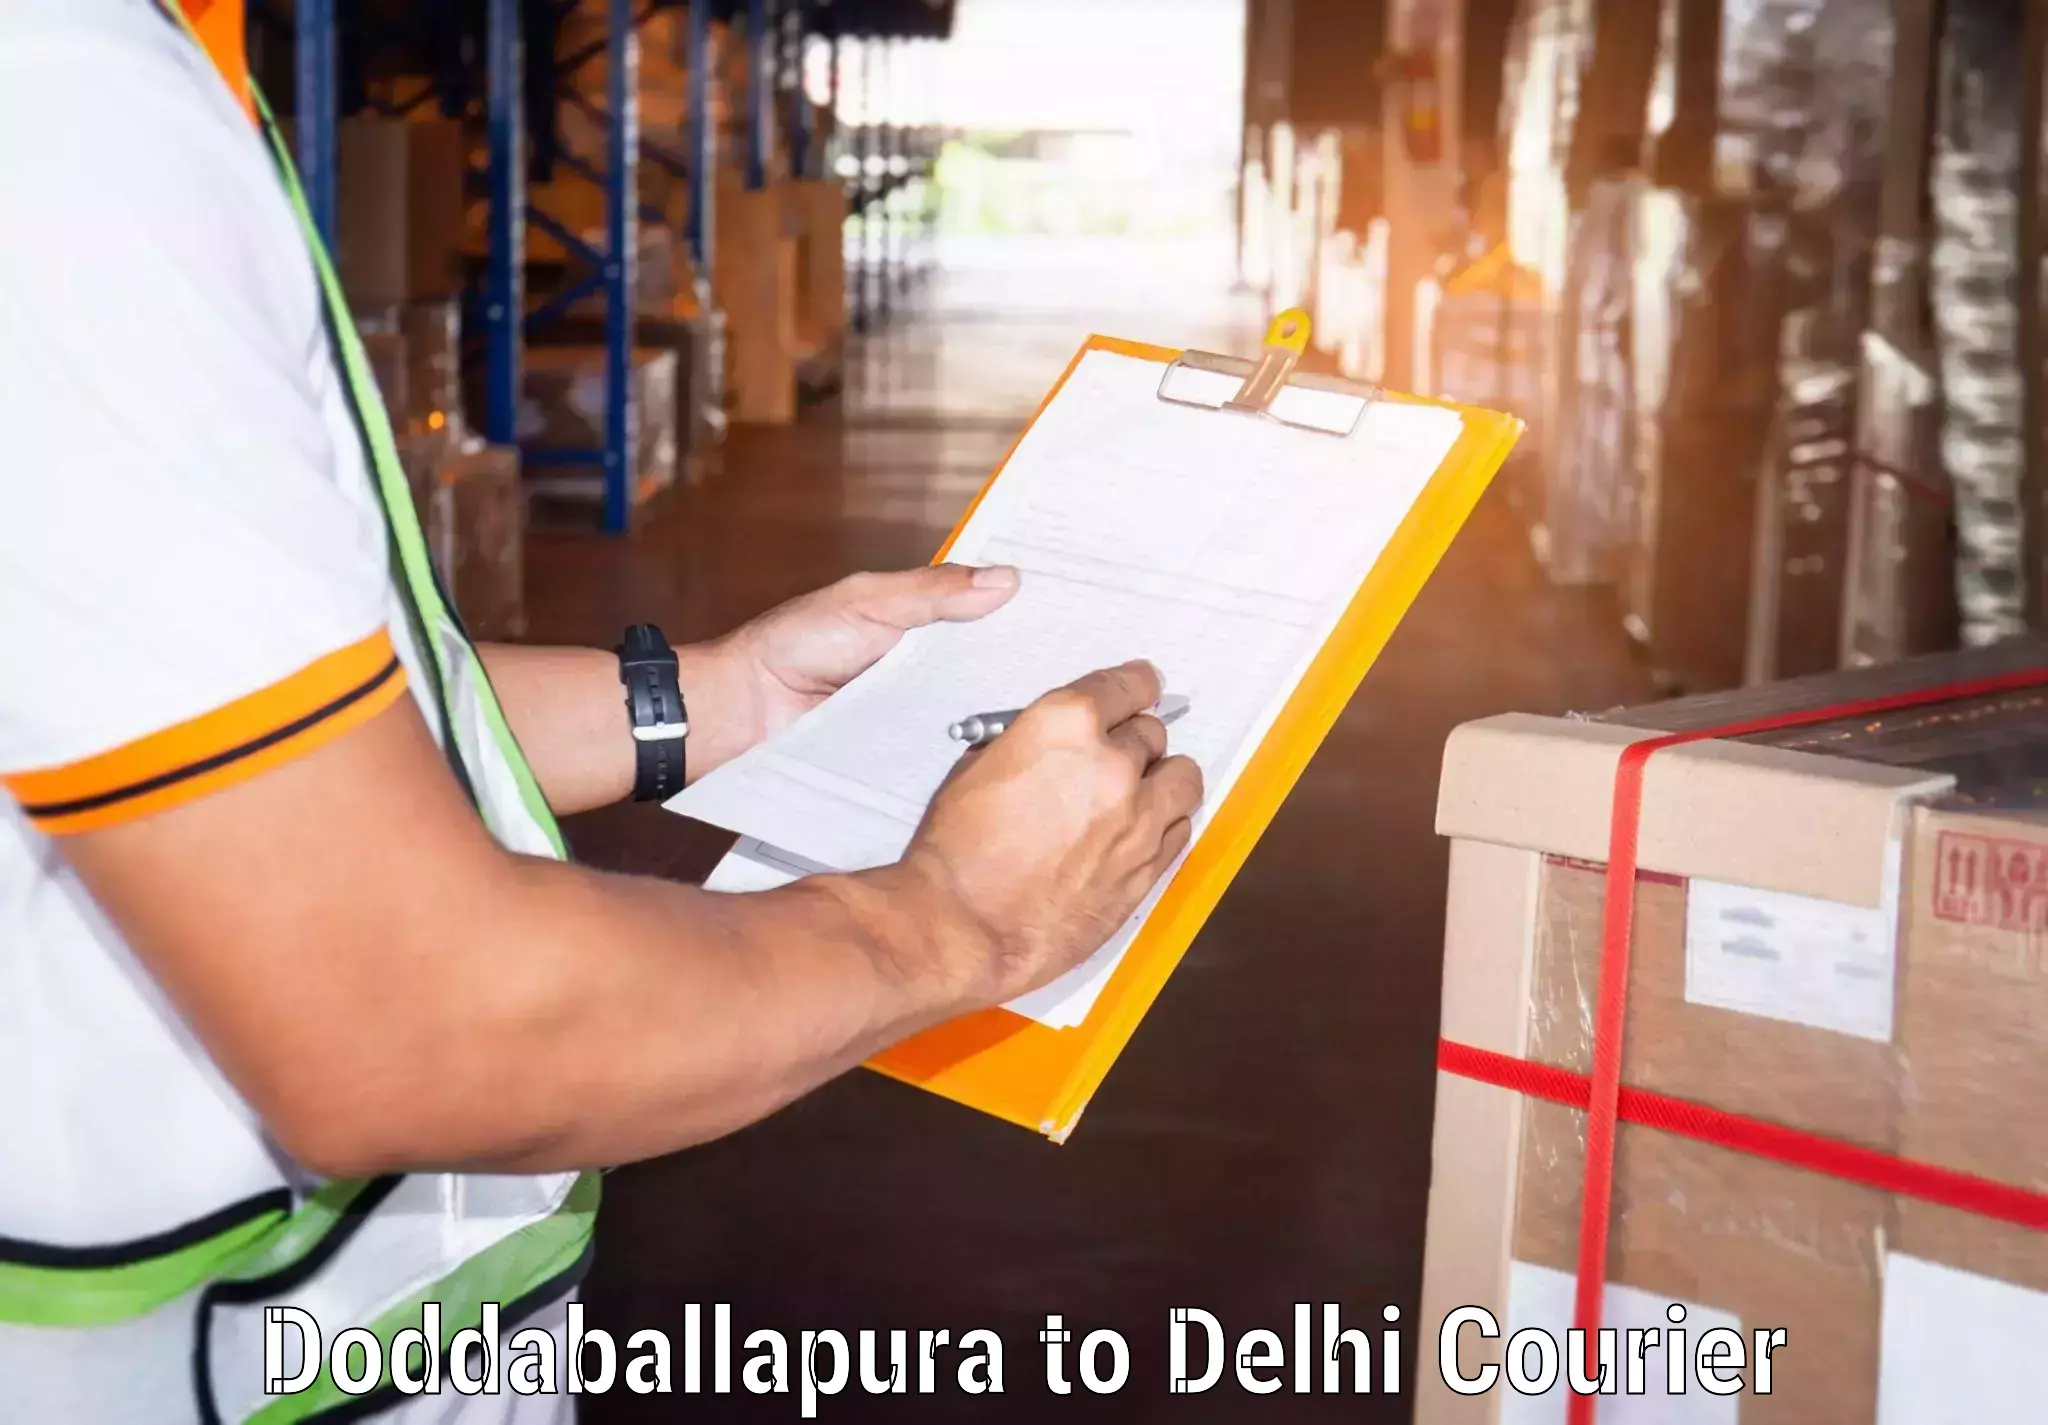 On-demand shipping options Doddaballapura to Burari